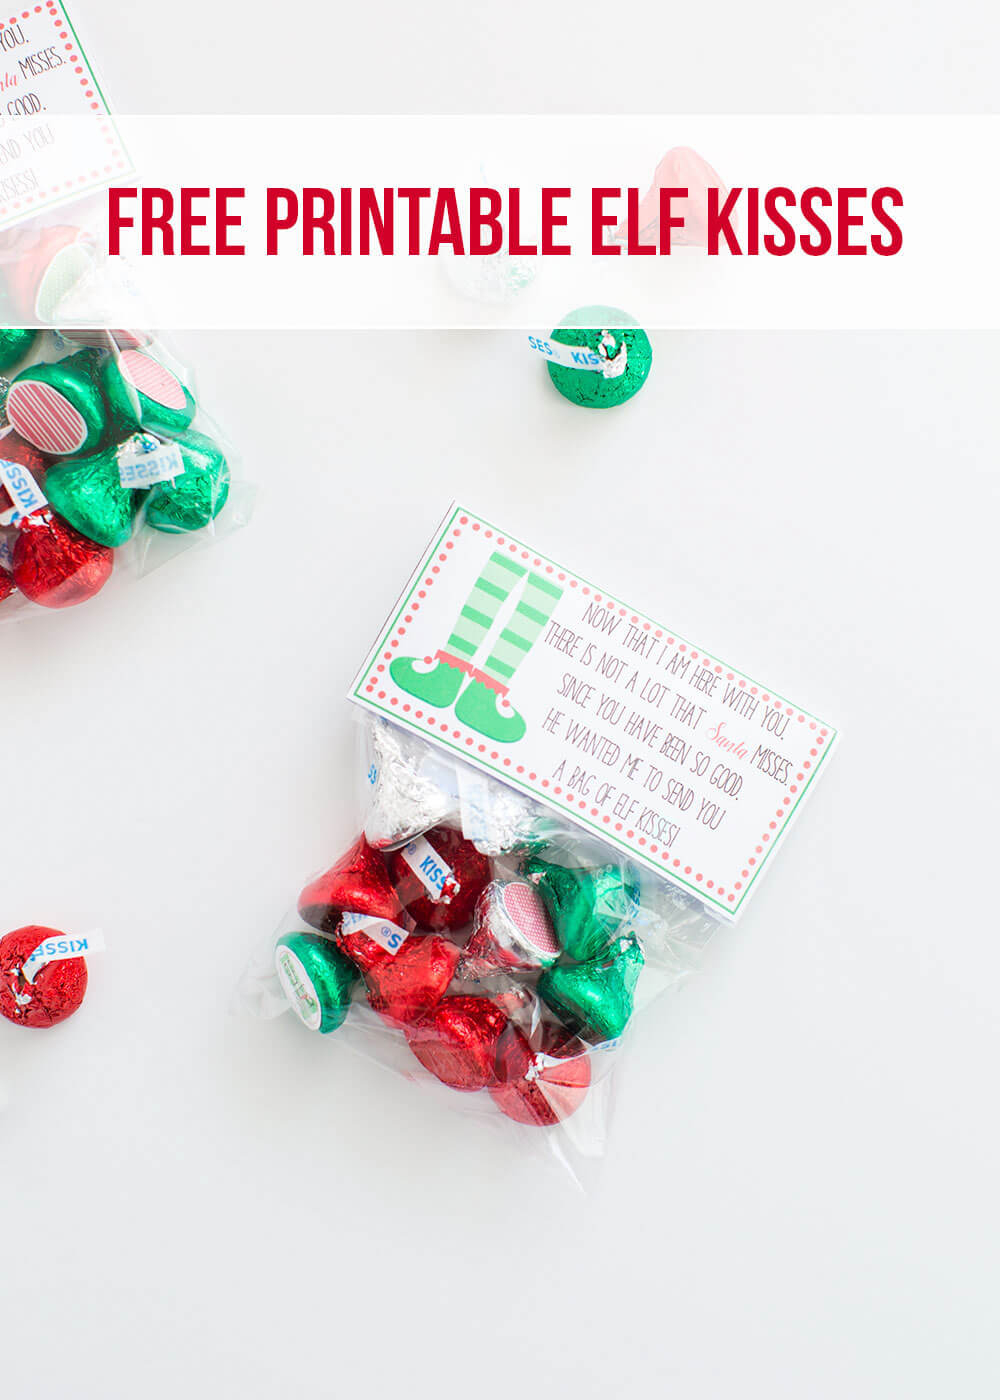 Elf Kisses (Free Printable) - The Inspiration Board - Free Printable Elf Kisses Tags